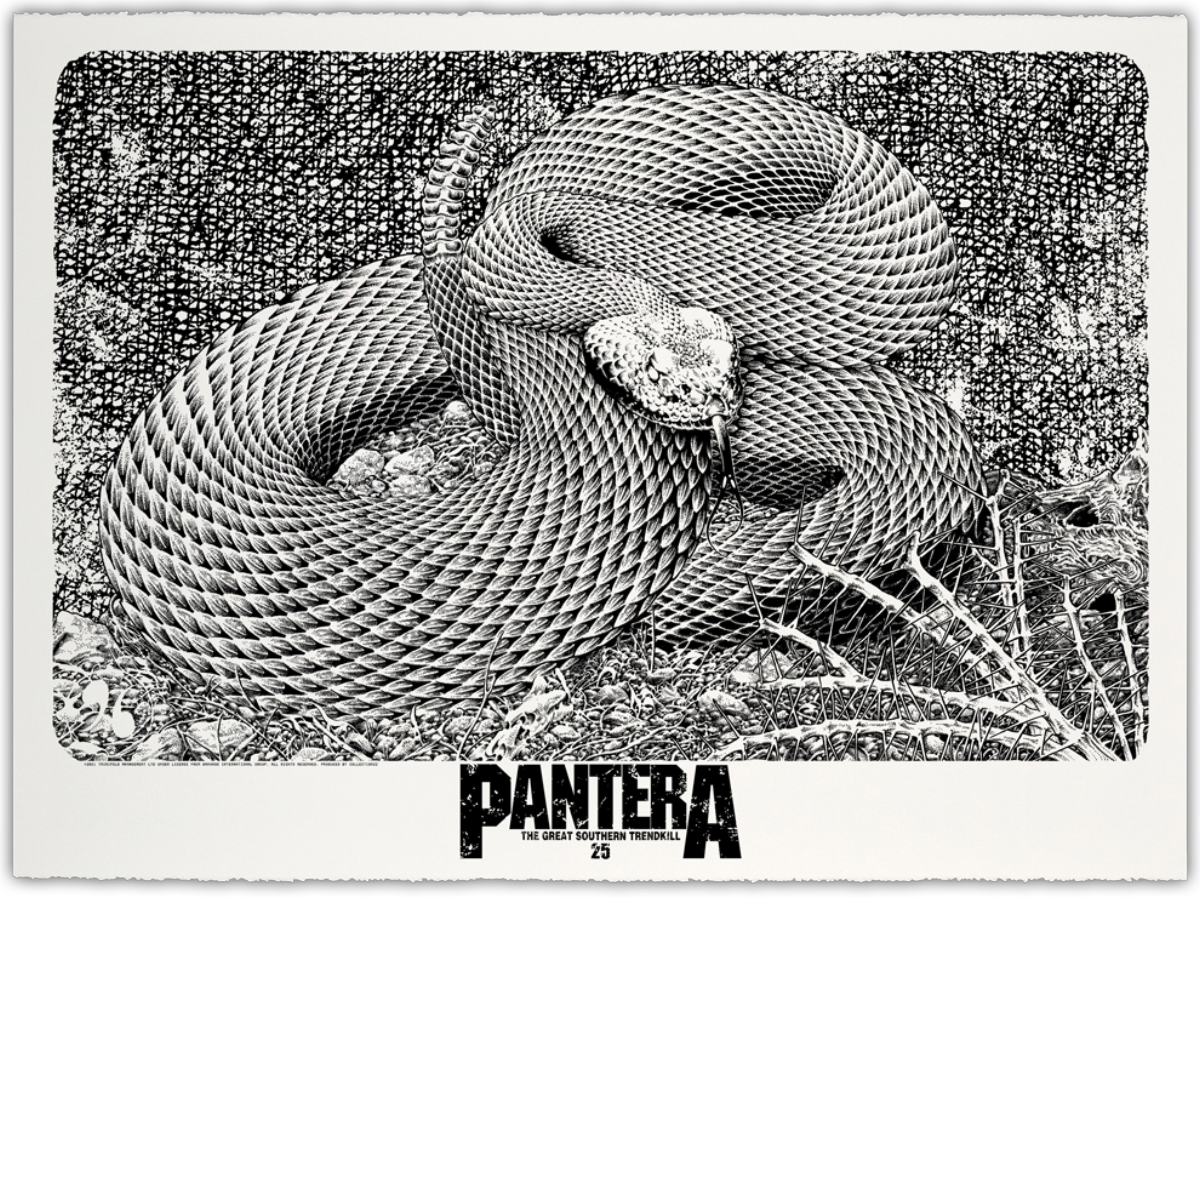 Pantera The Great Southern Trendkill 25 (Cotton Rag XL Variant)